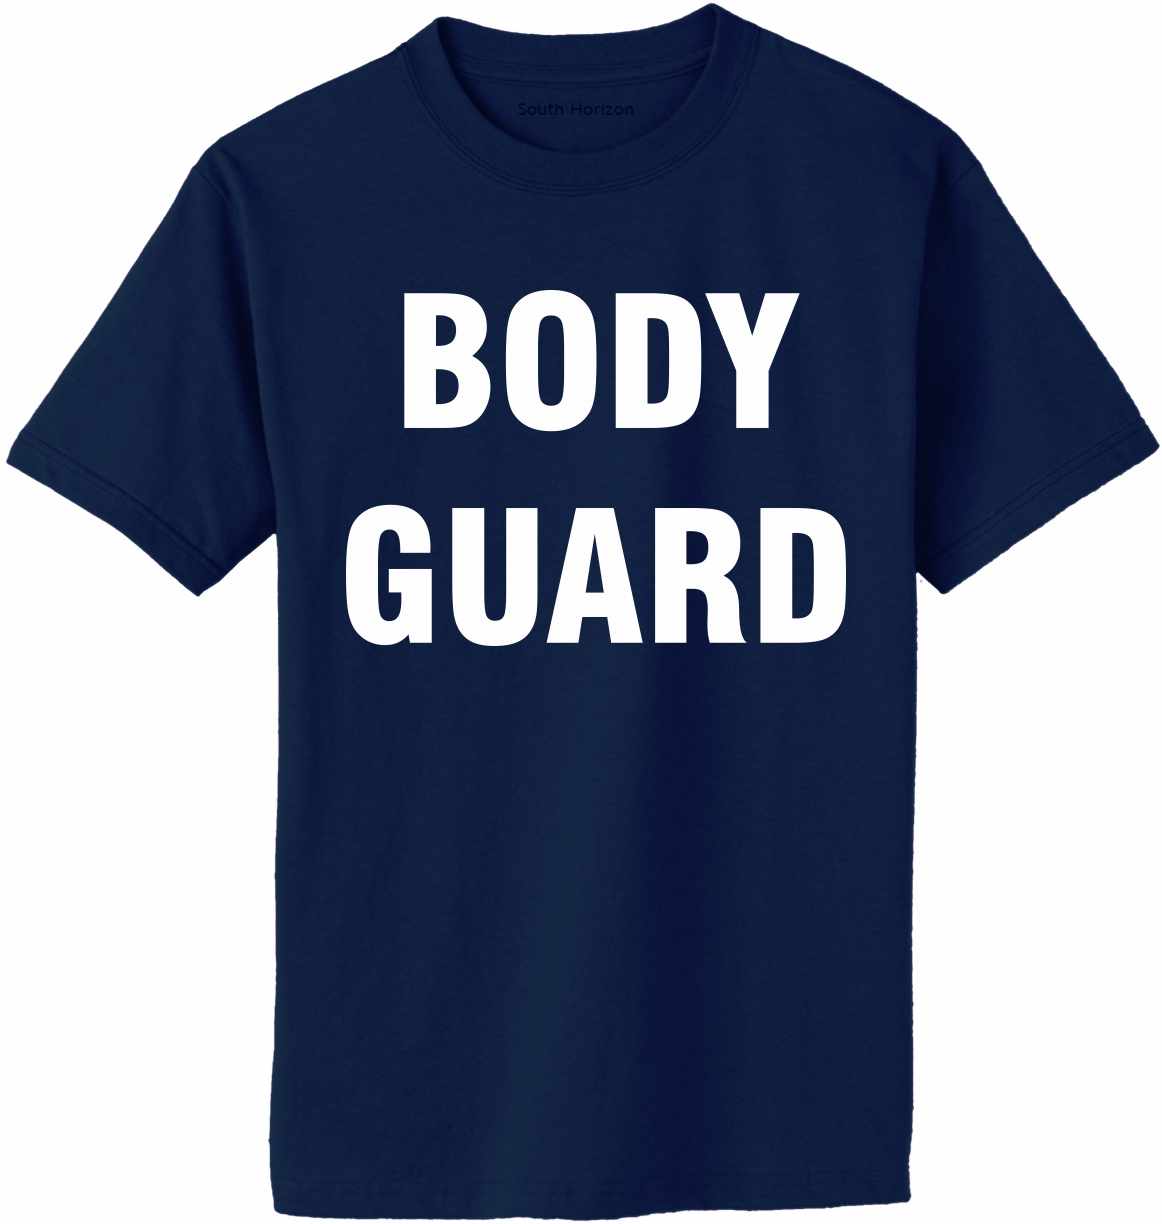 BODY GUARD Adult T-Shirt (#234-1)